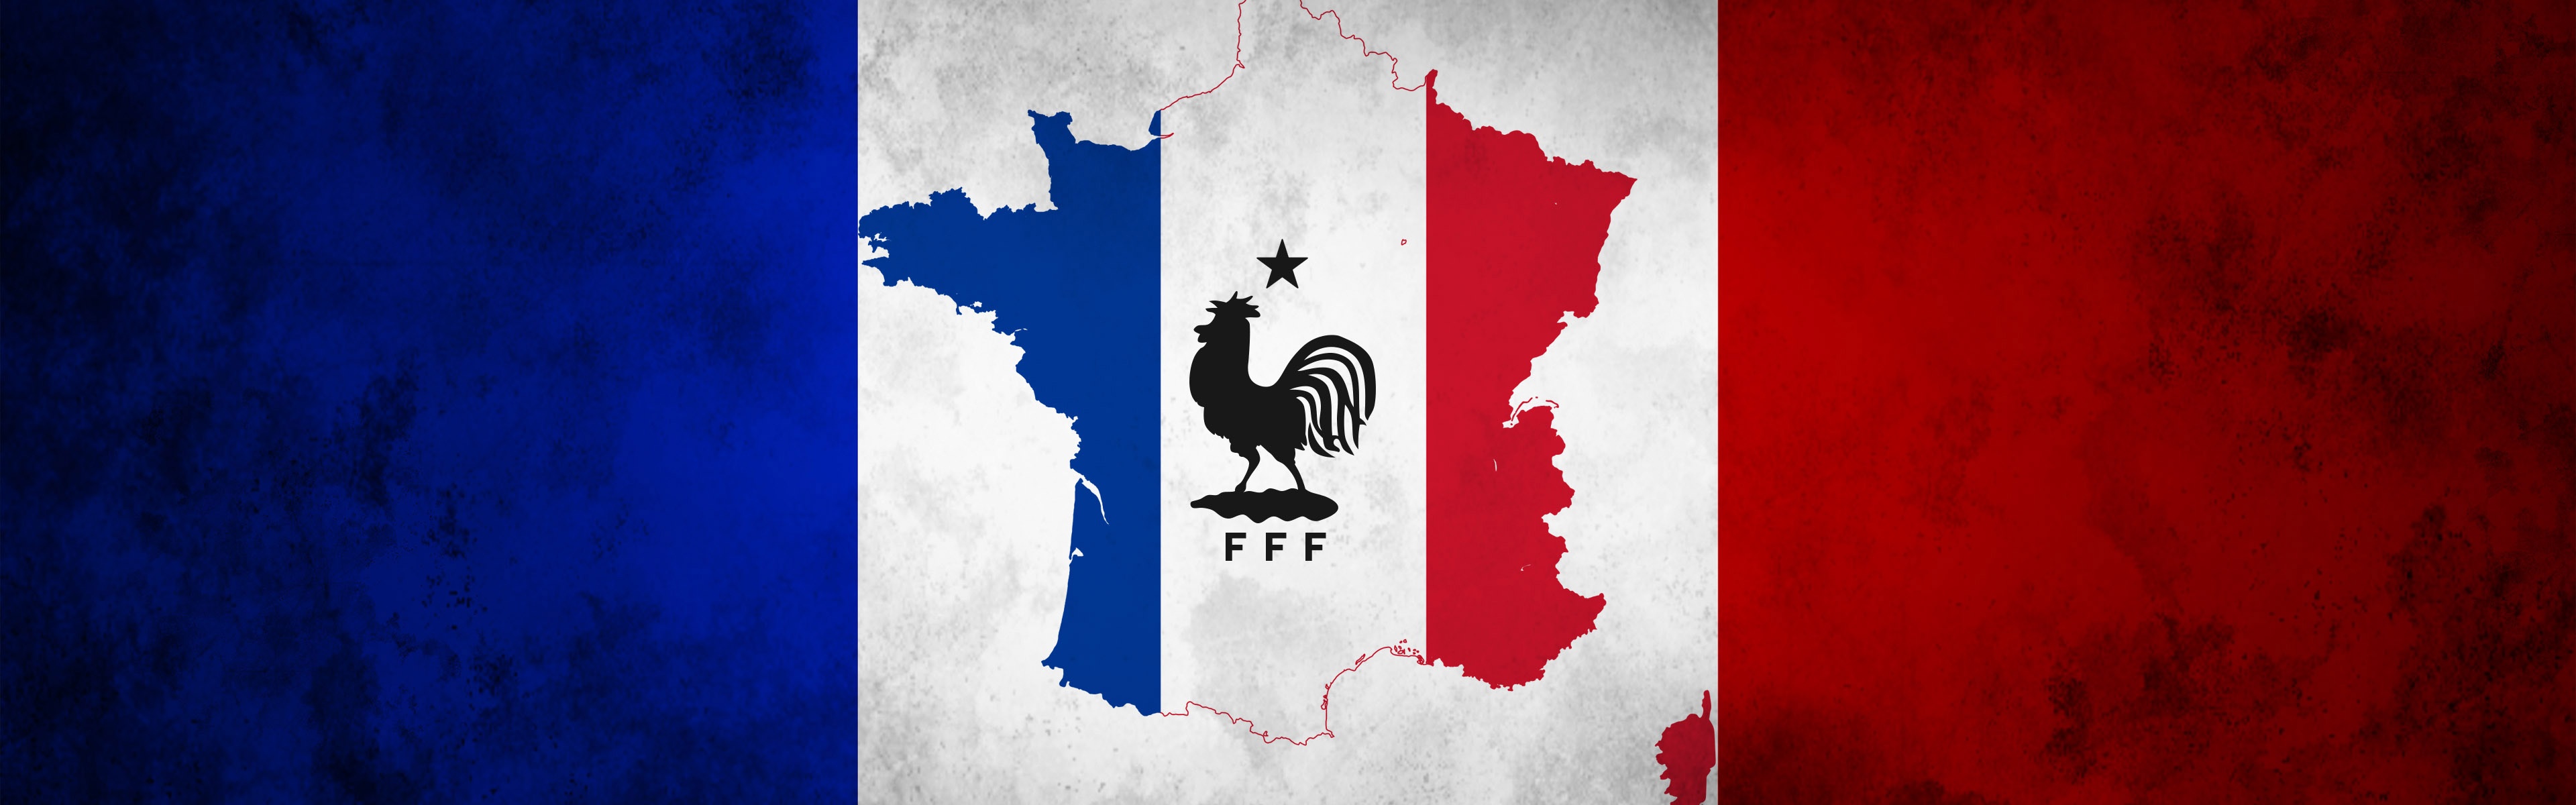 Les Bleus Football Crest France